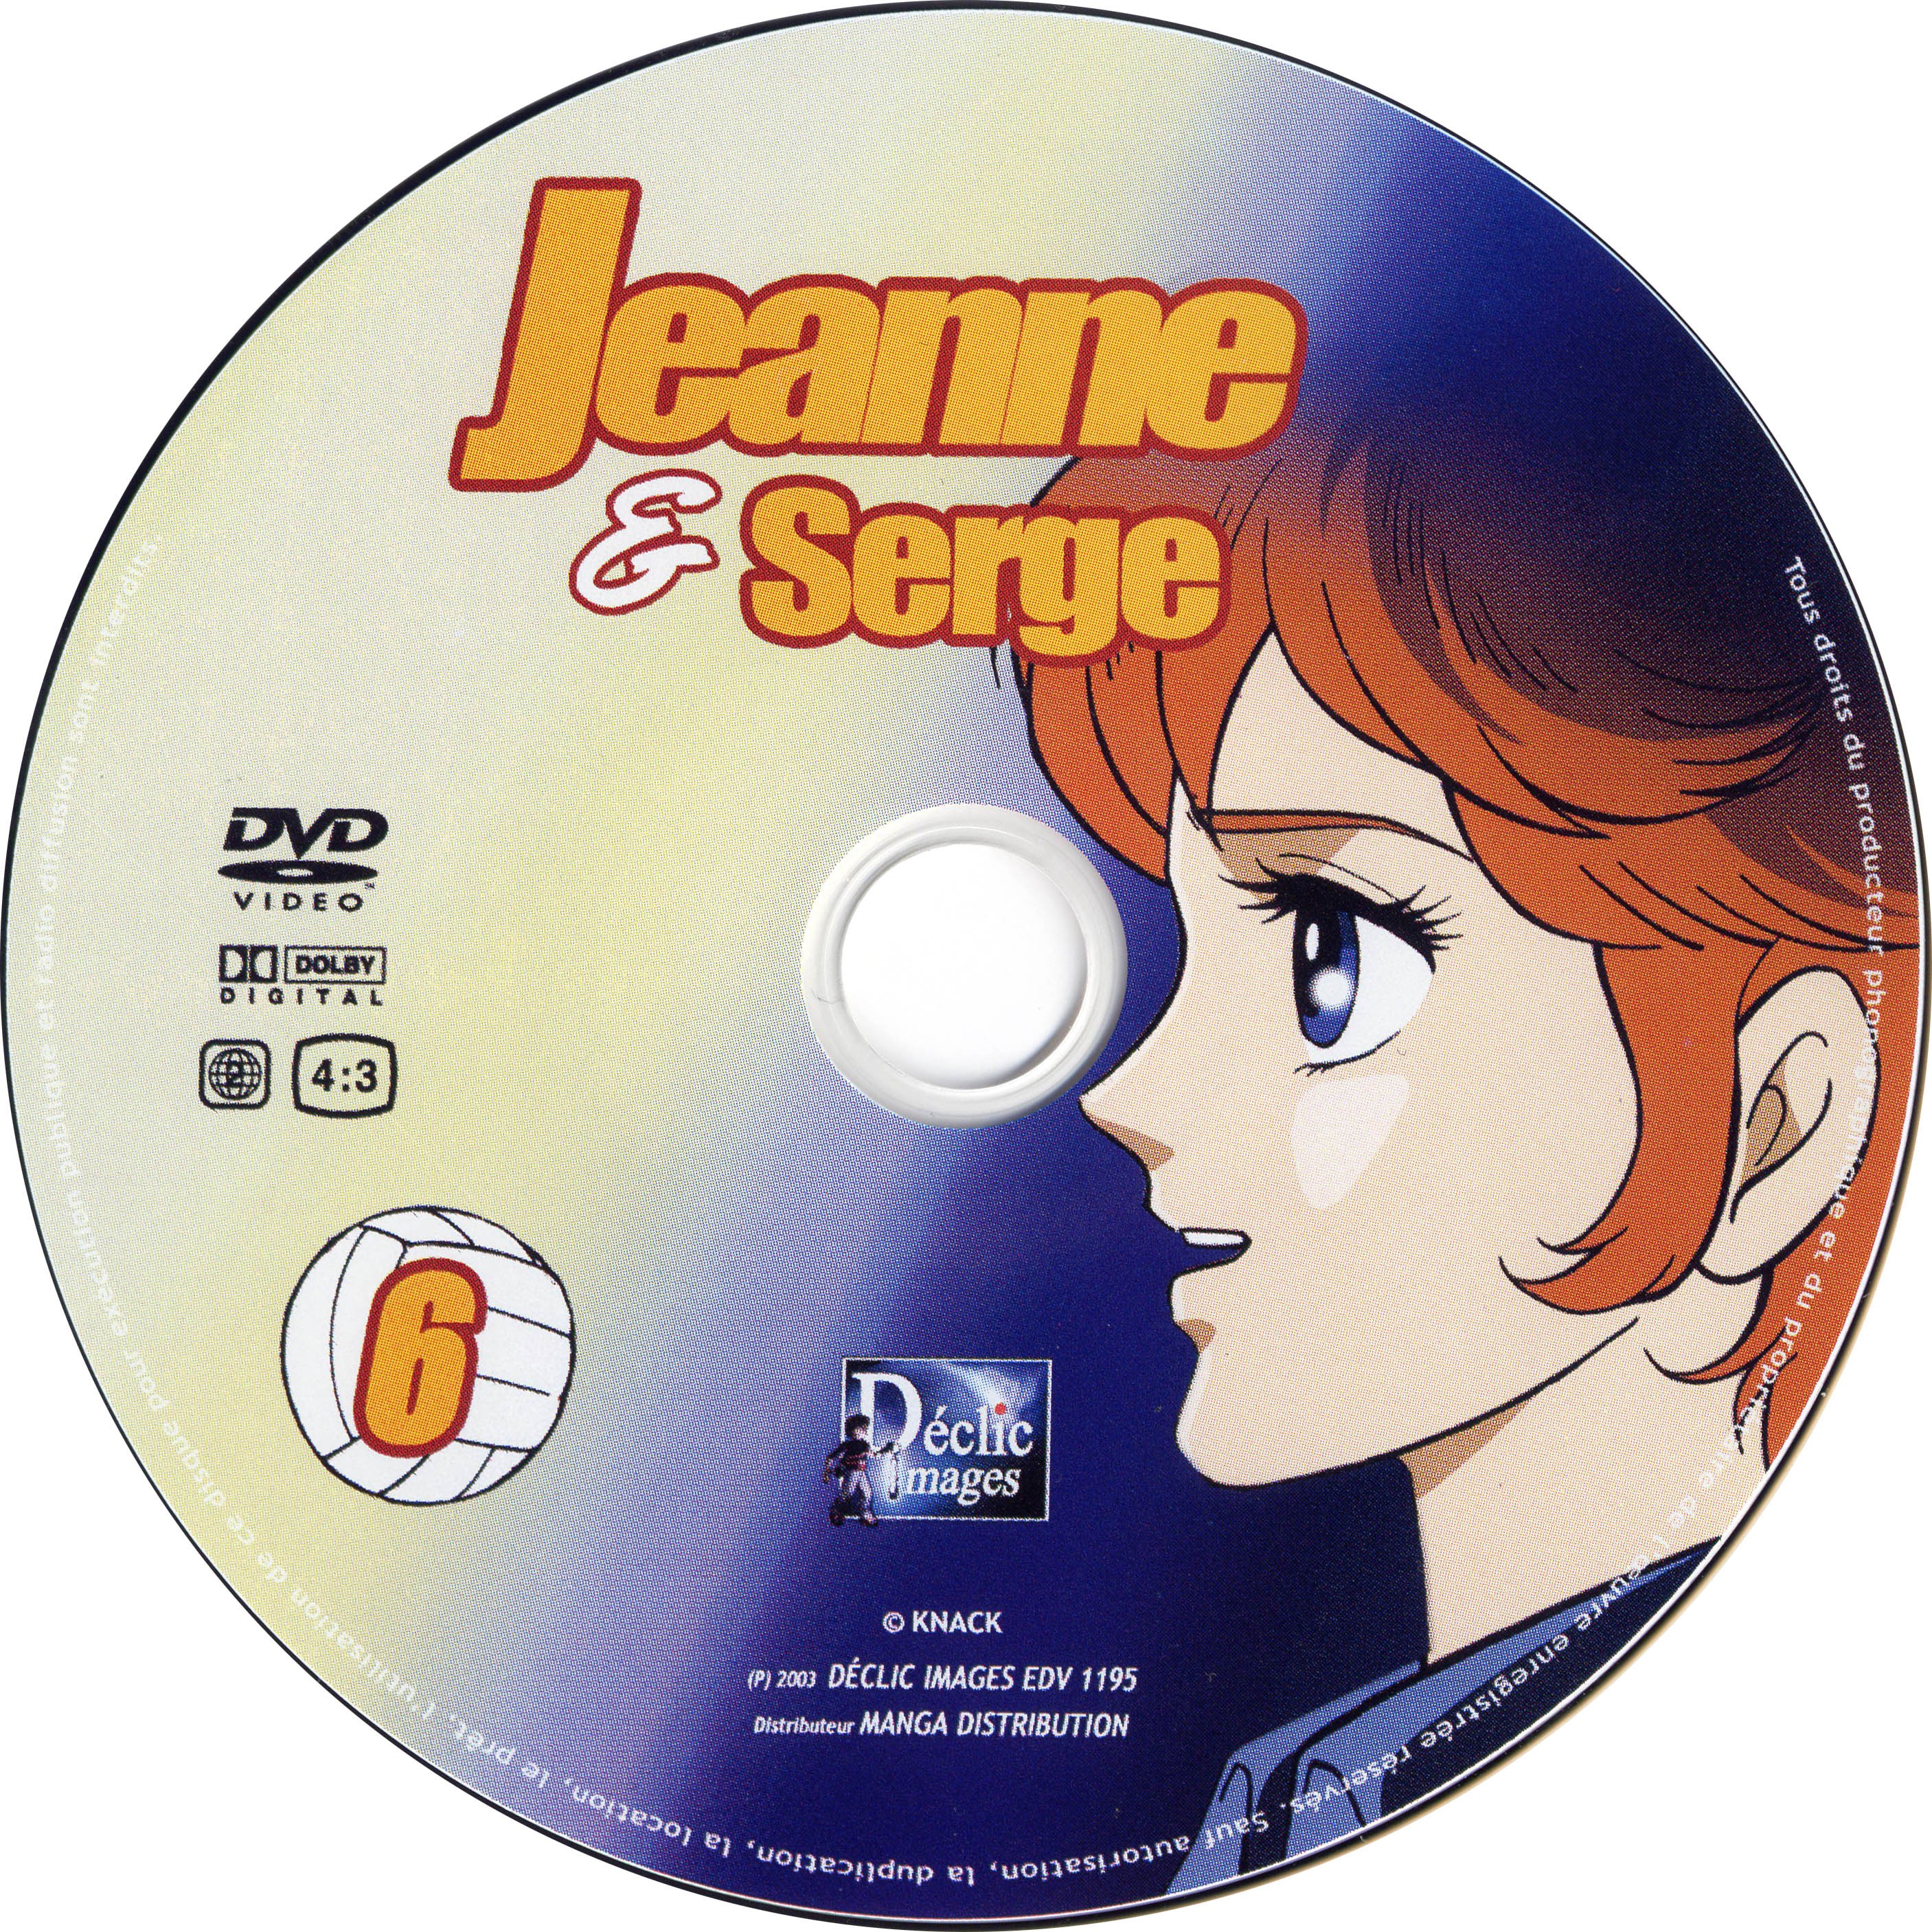 Jeanne et Serge vol 06